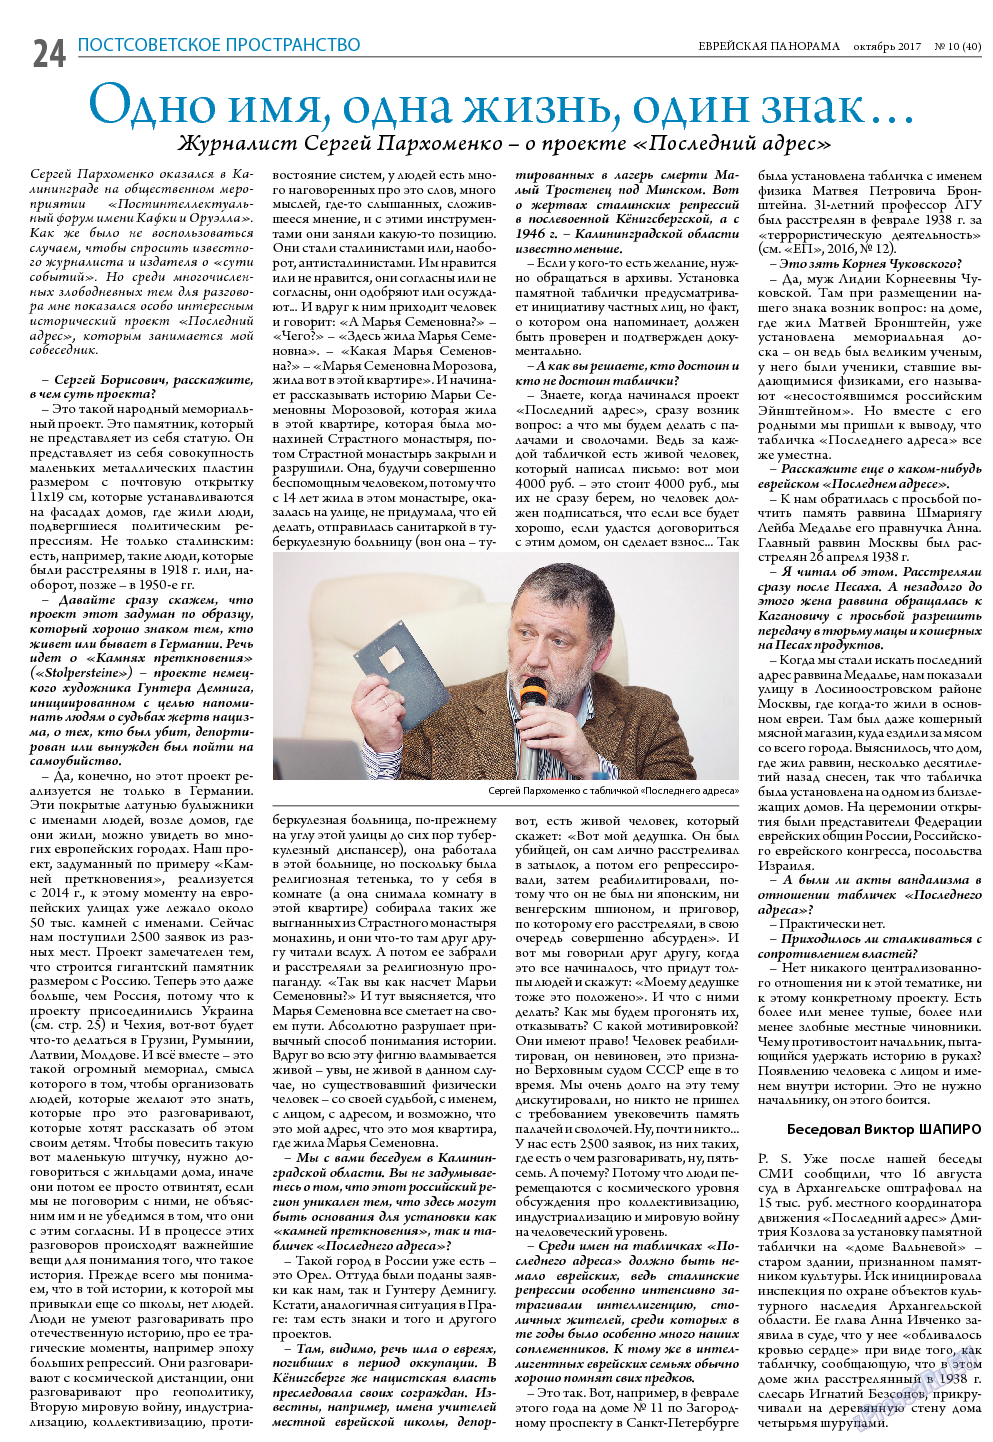 Еврейская панорама, газета. 2017 №10 стр.24